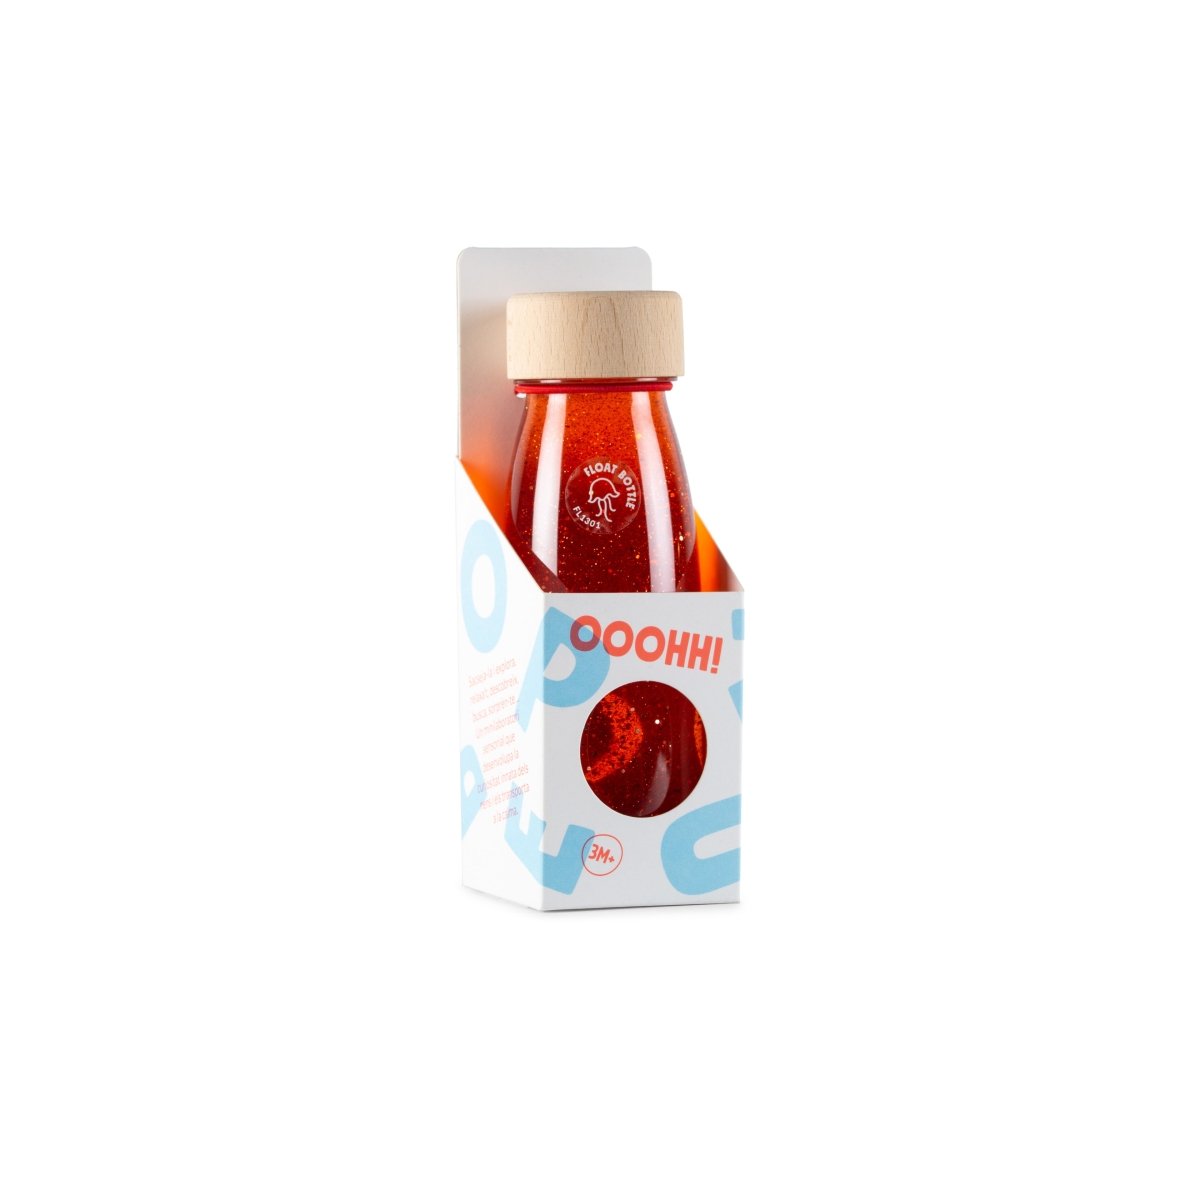 Botella sensorial - FLOAT - Naranja - Casa de Fieras